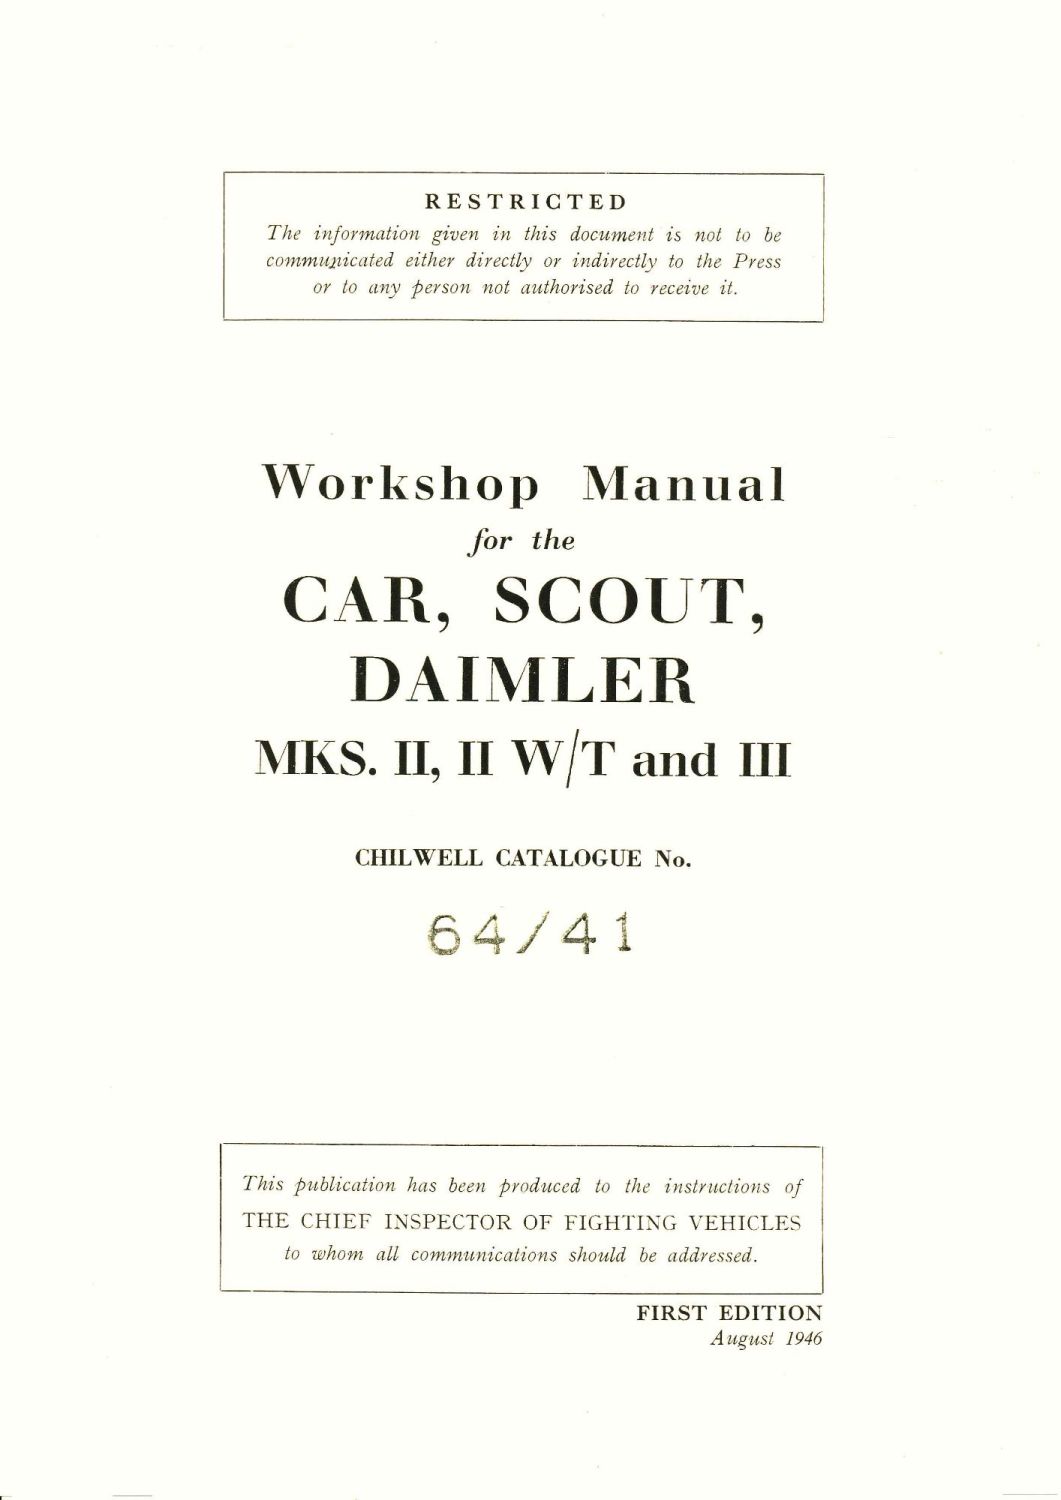 Daimler Dingo Scot Car Mks II, II W/T & III Workshop Manual